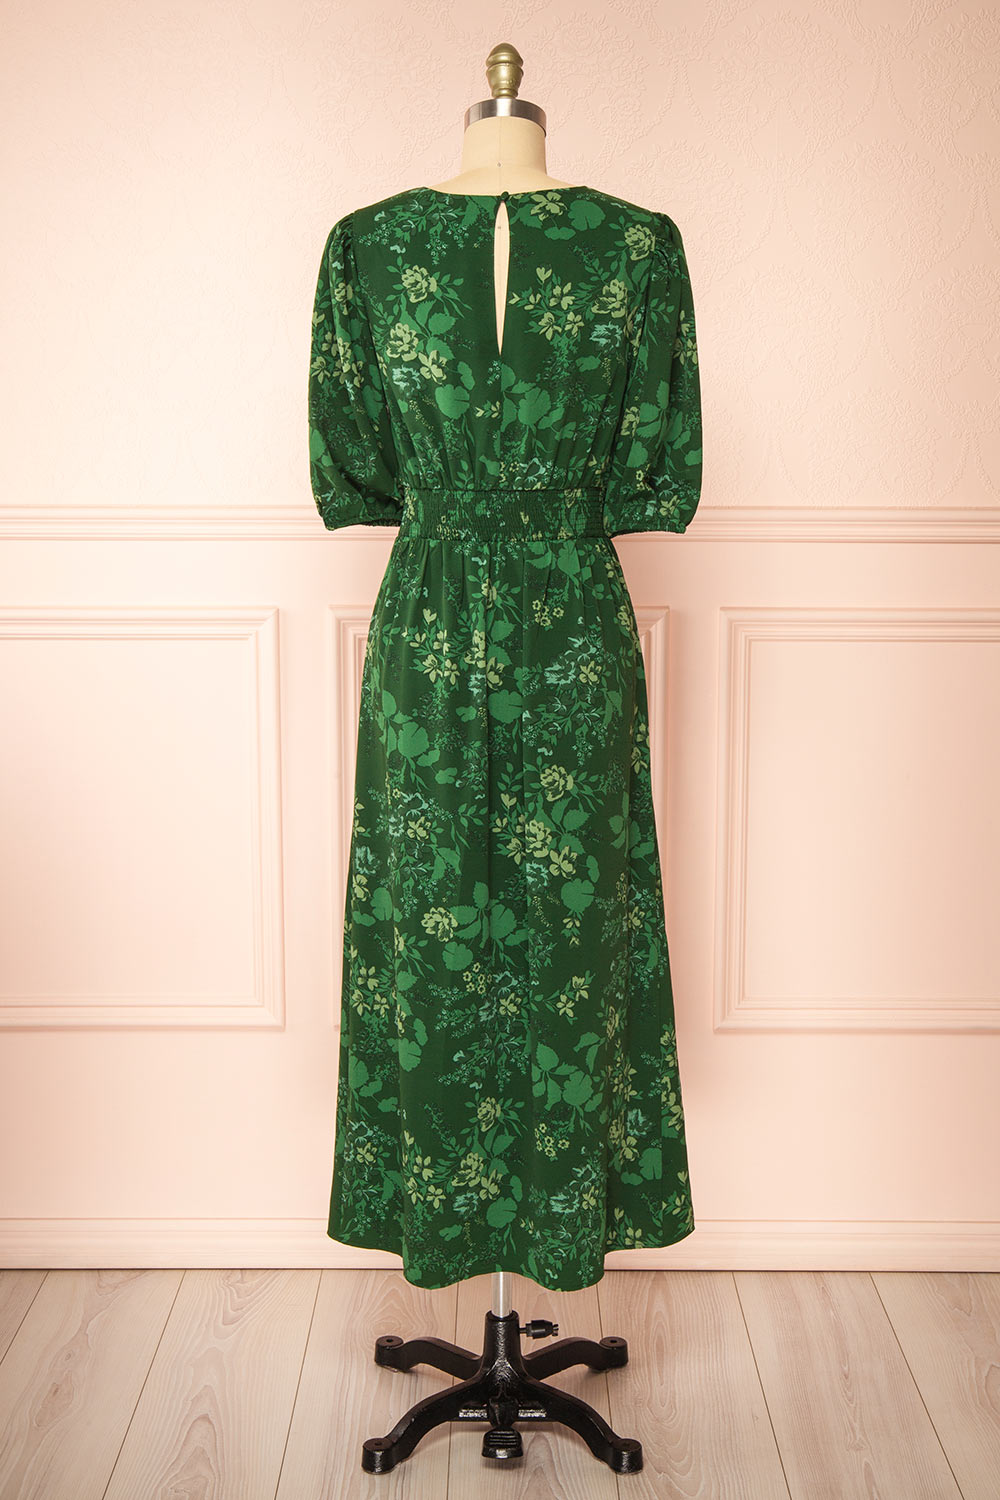 Emirida Long Dark Green Floral Dress | Boutique 1861 back view